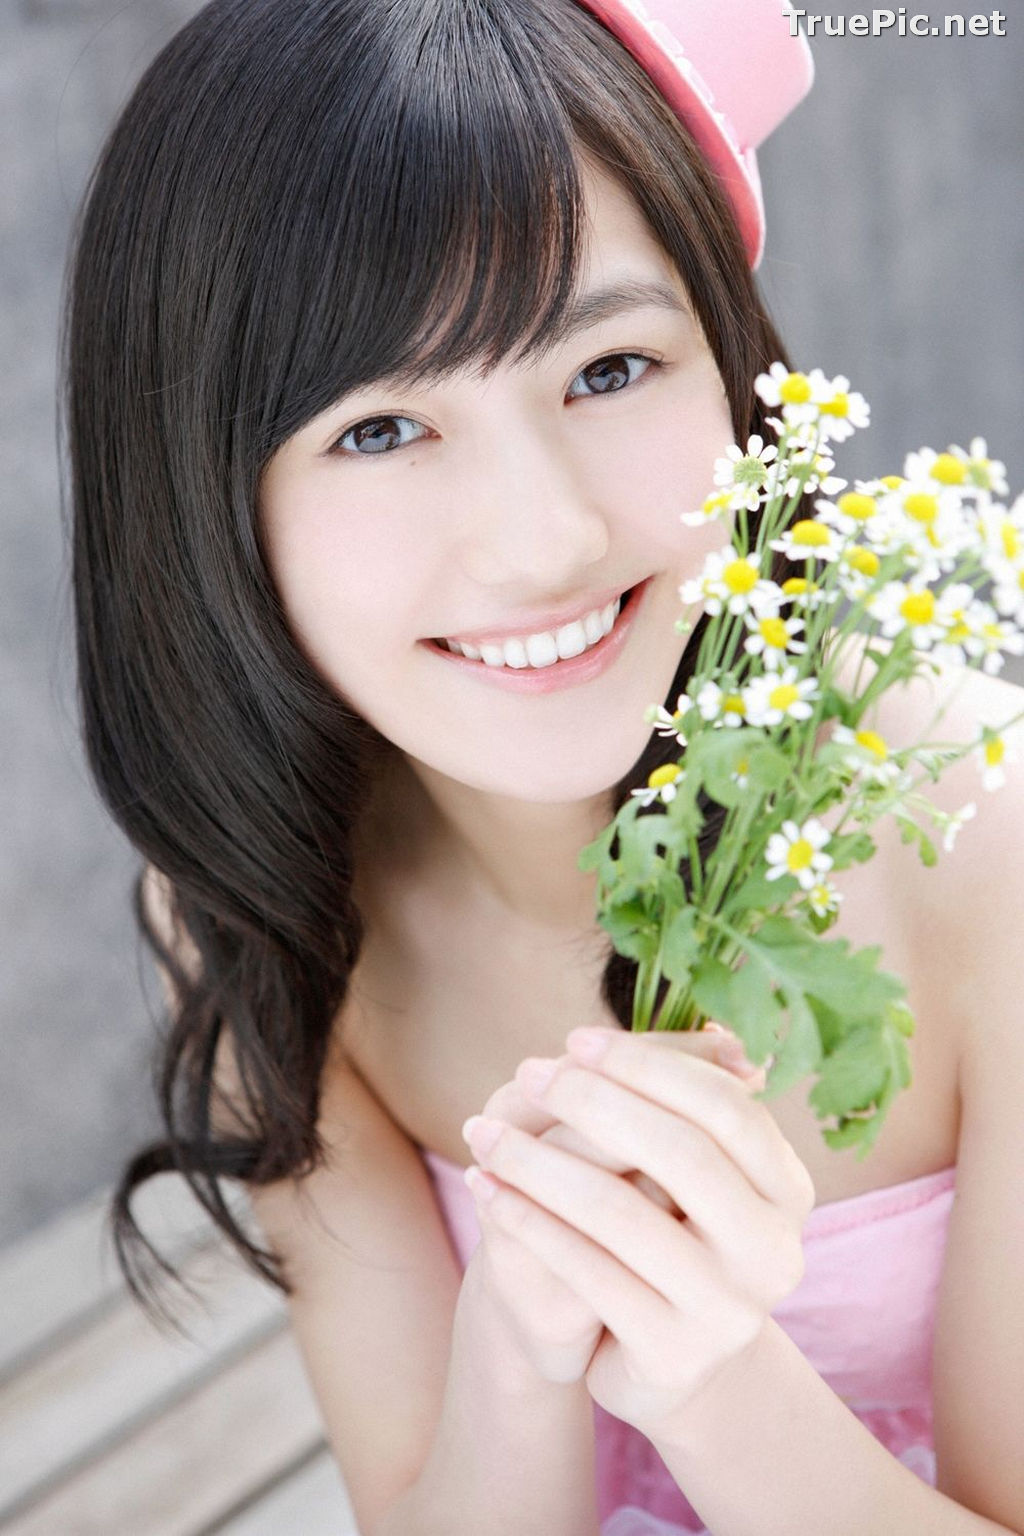 Image [YS Web] Vol.531 - Japanese Idol Girl Group (AKB48) - Mayu Watanabe - TruePic.net - Picture-45